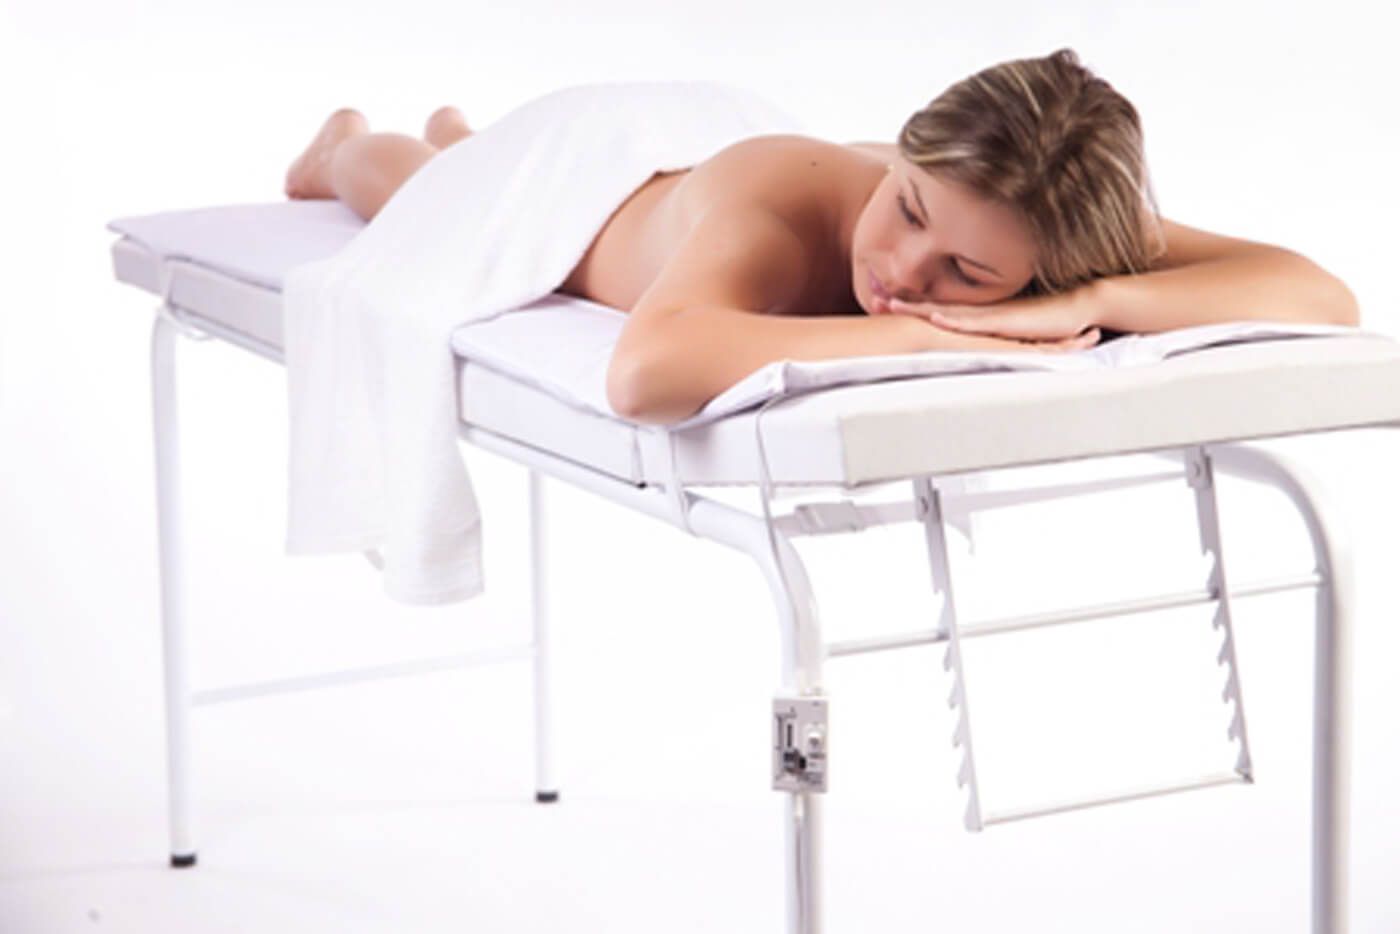 Colchonete Térmico Massagem en Napa Branco 1,80 x 0,60m 220 volts - Conforto e Terapia